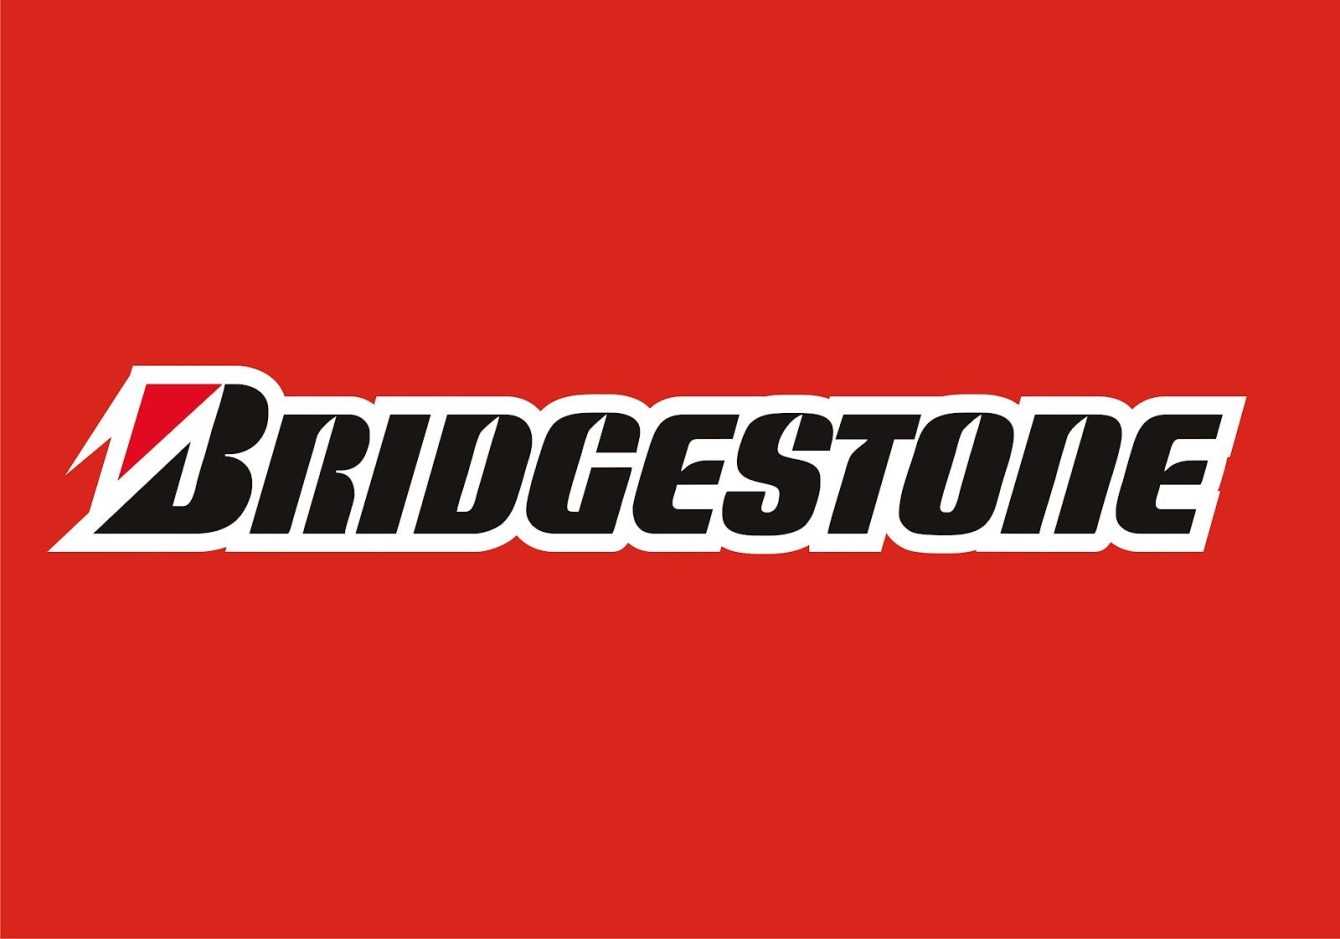 Bridgestone announces its first zero-impact manufacturing plant